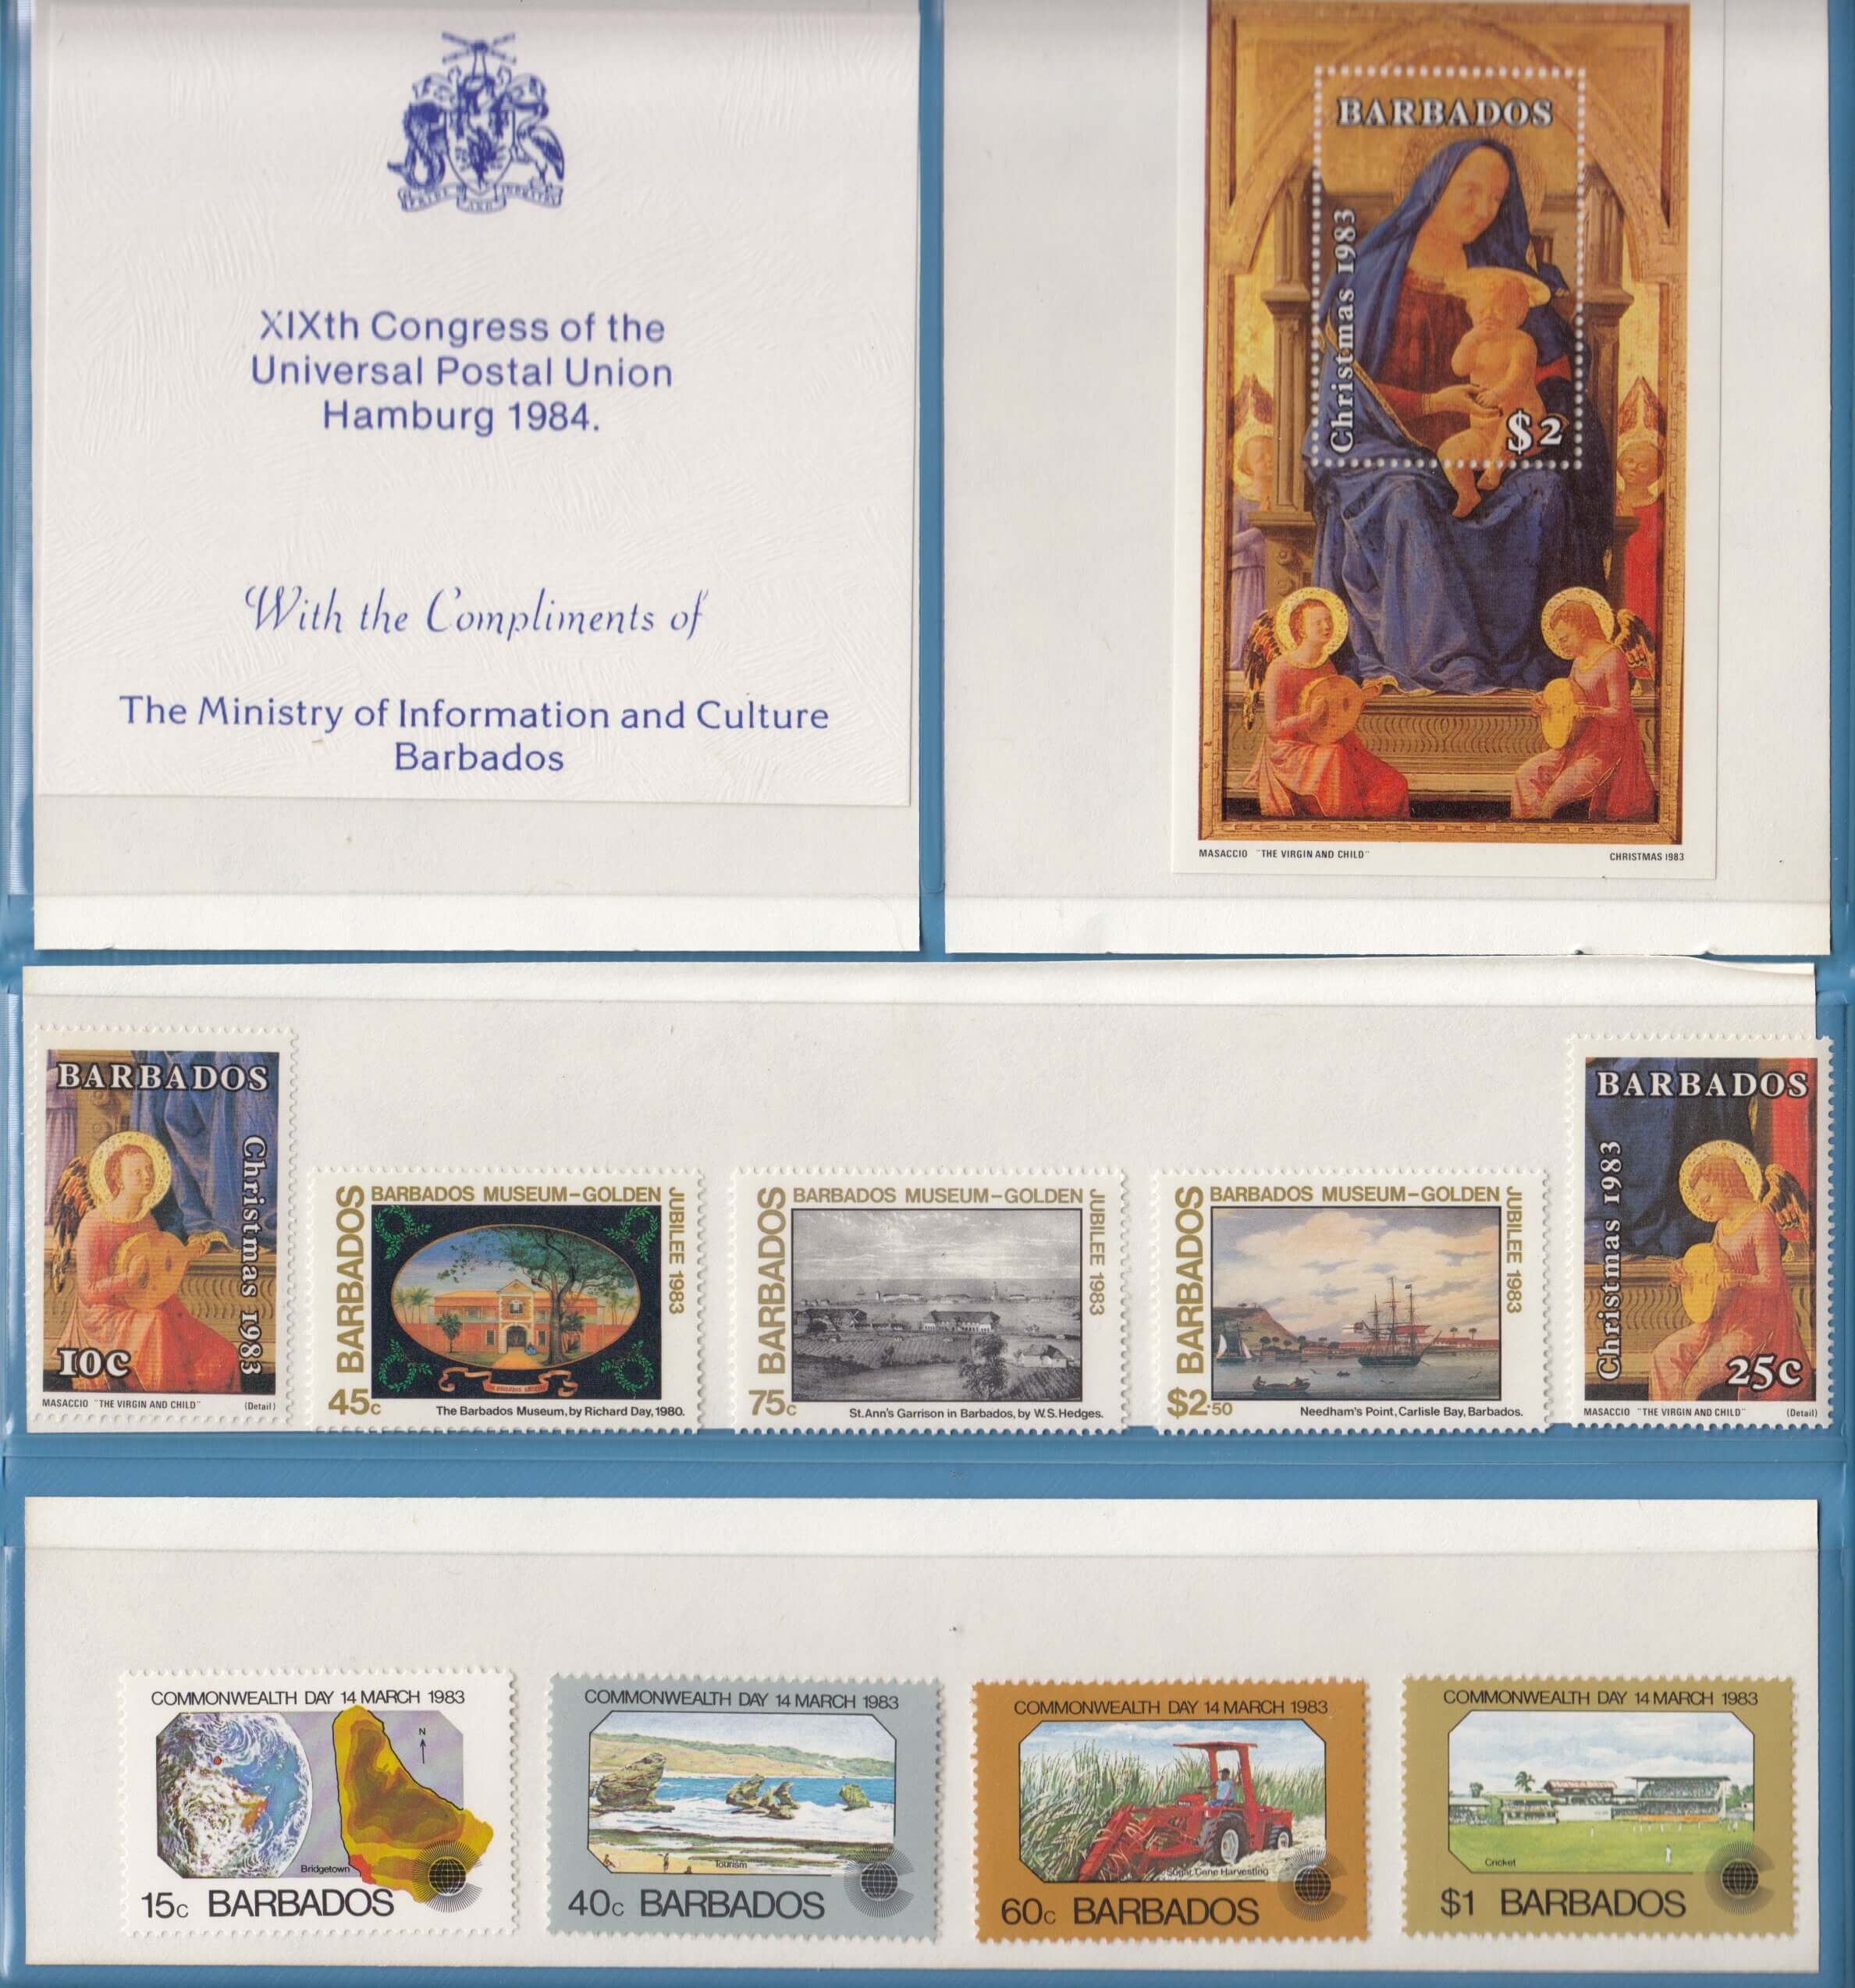 XIXth Congress of the Universal Postal Union (UPU) Hamburg 1984 Barbados Stamps folder